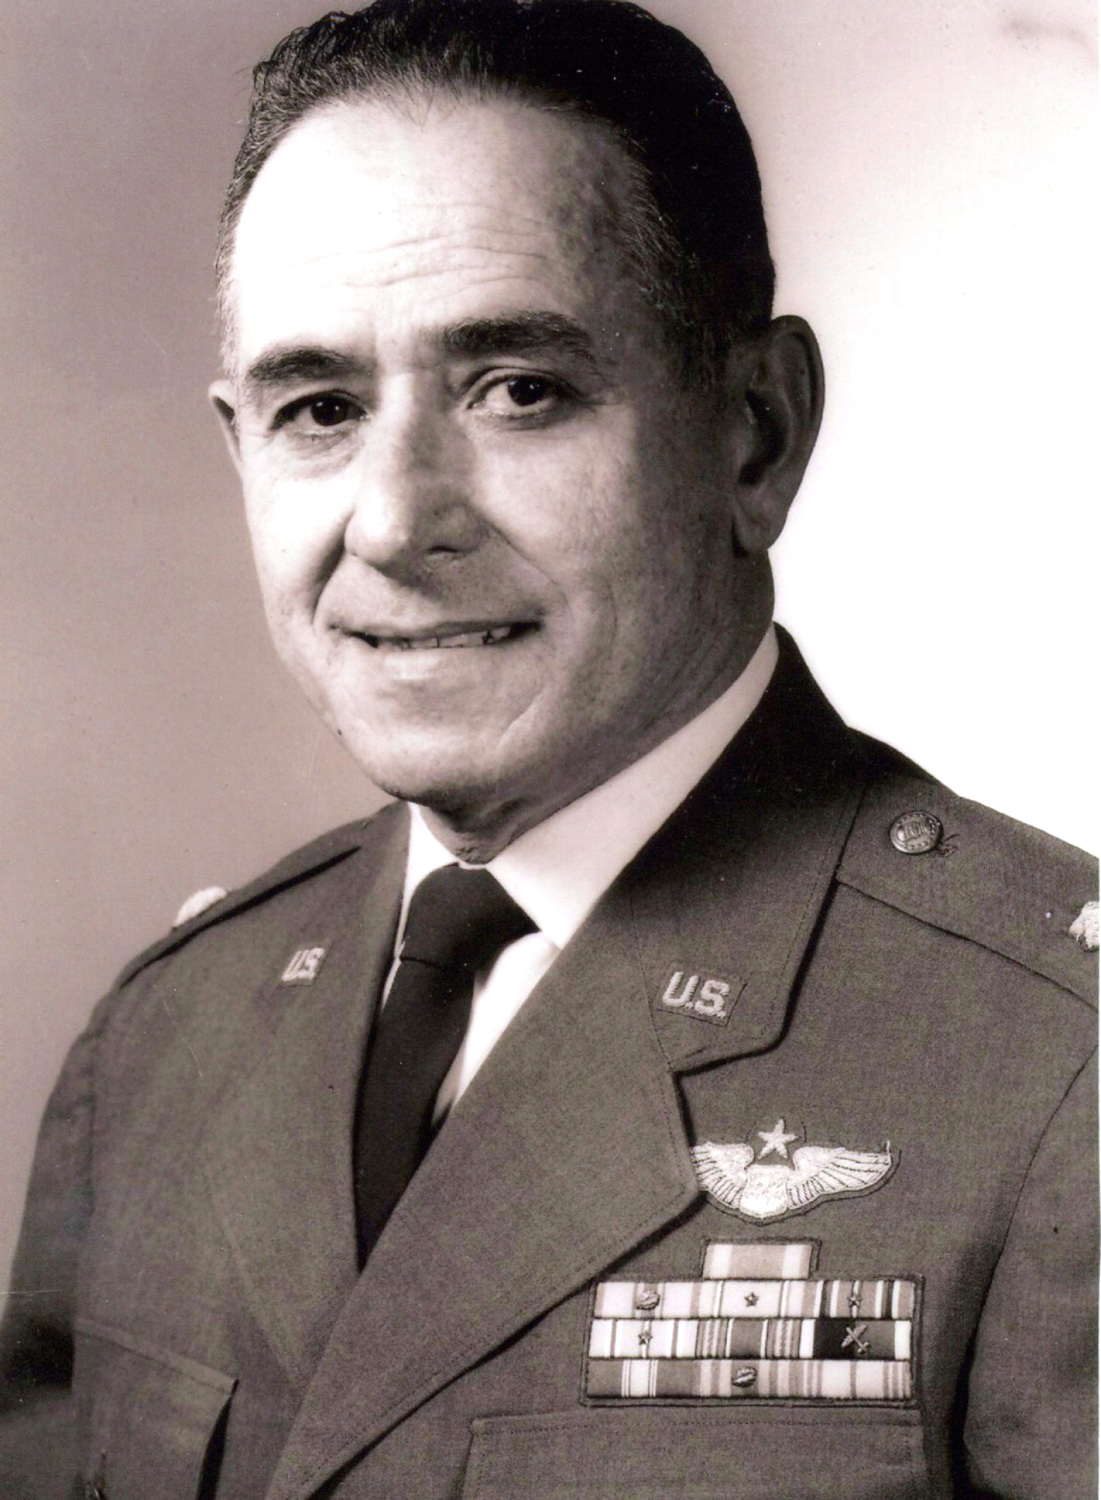 Lt. Col. Fred Silverman USAF (Ret)